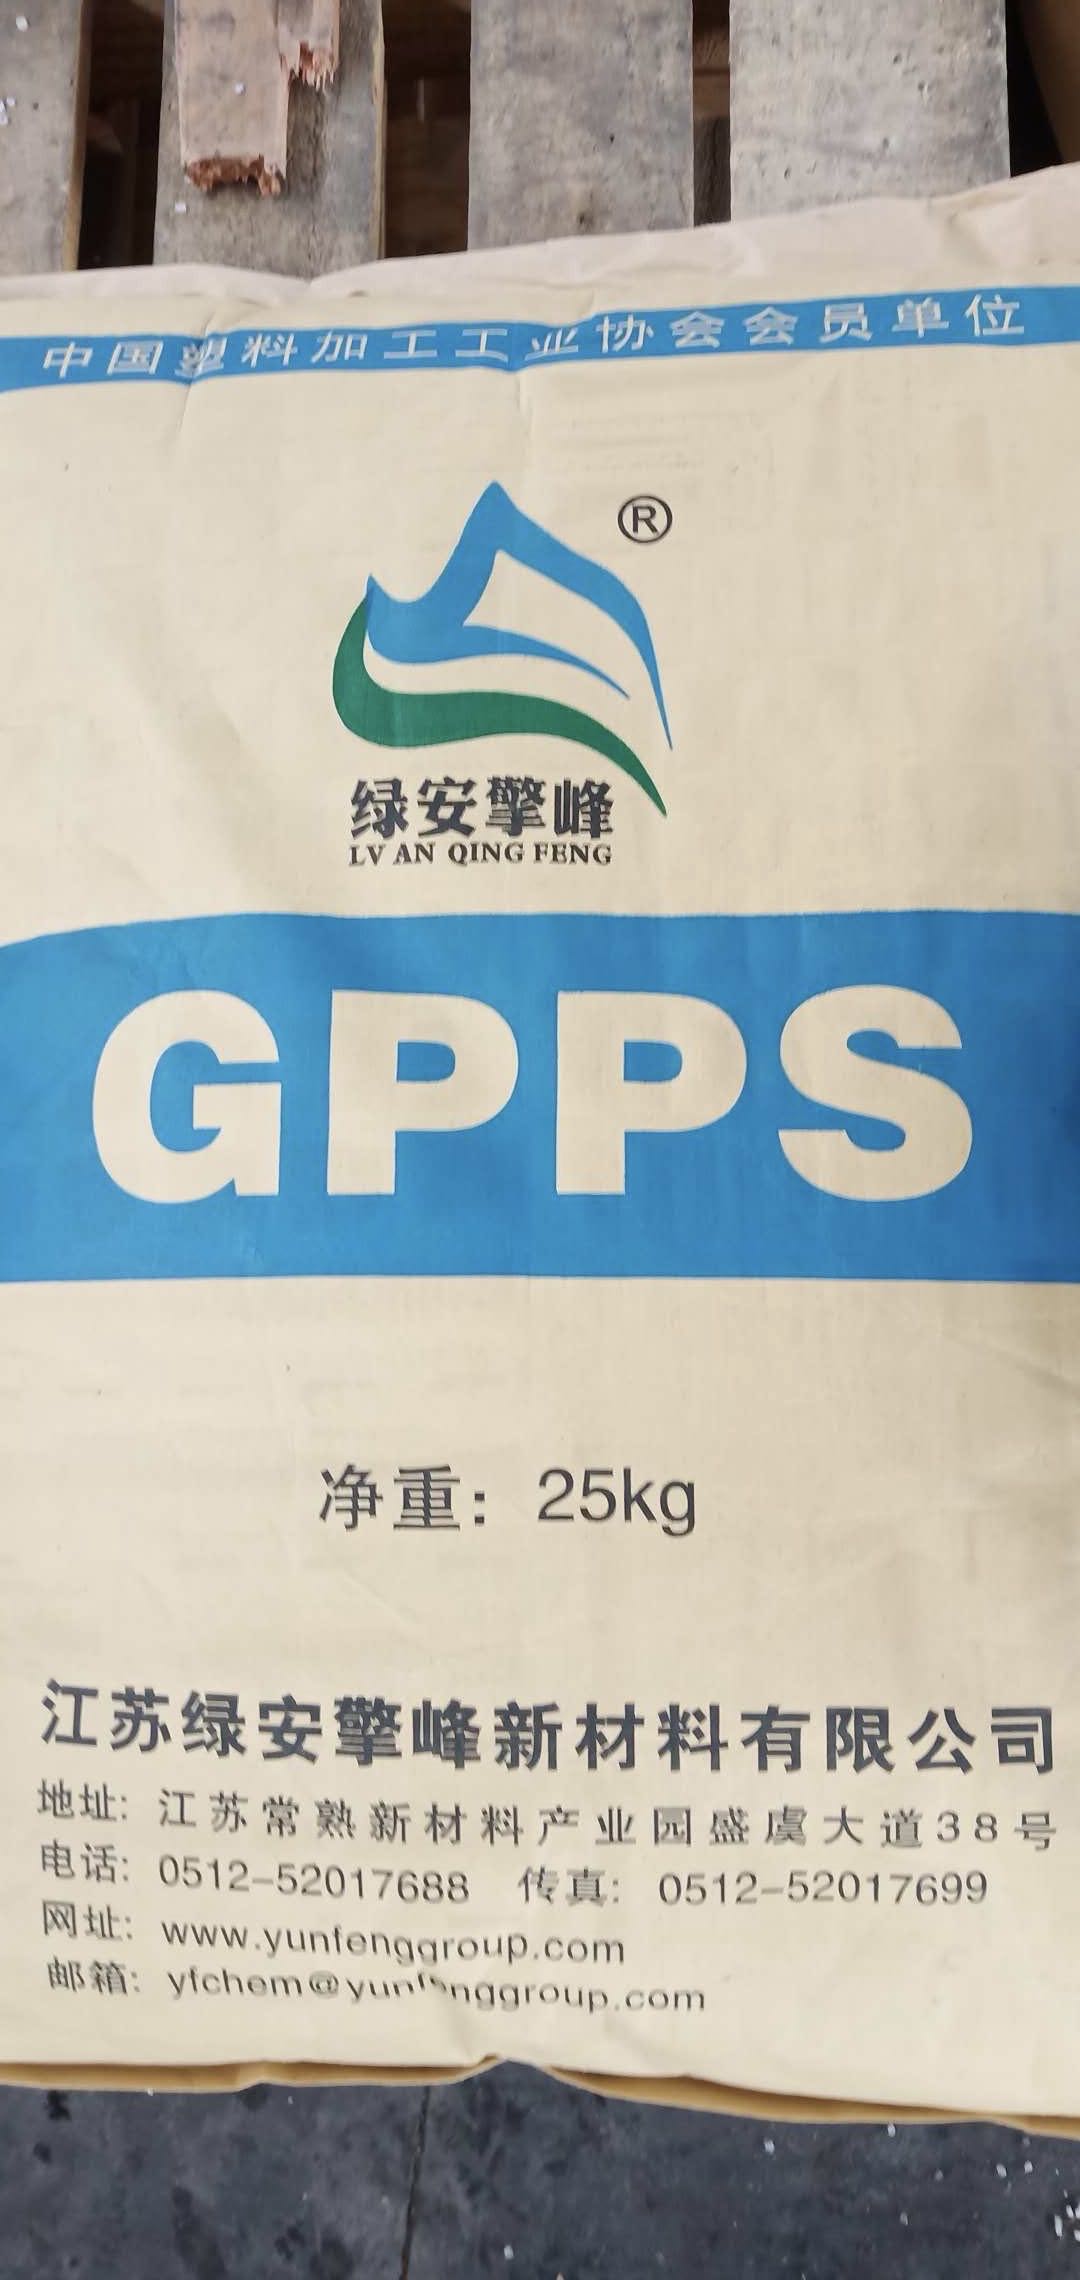 GPPS 绿安擎峰 GP-525 透明级     20183B-4